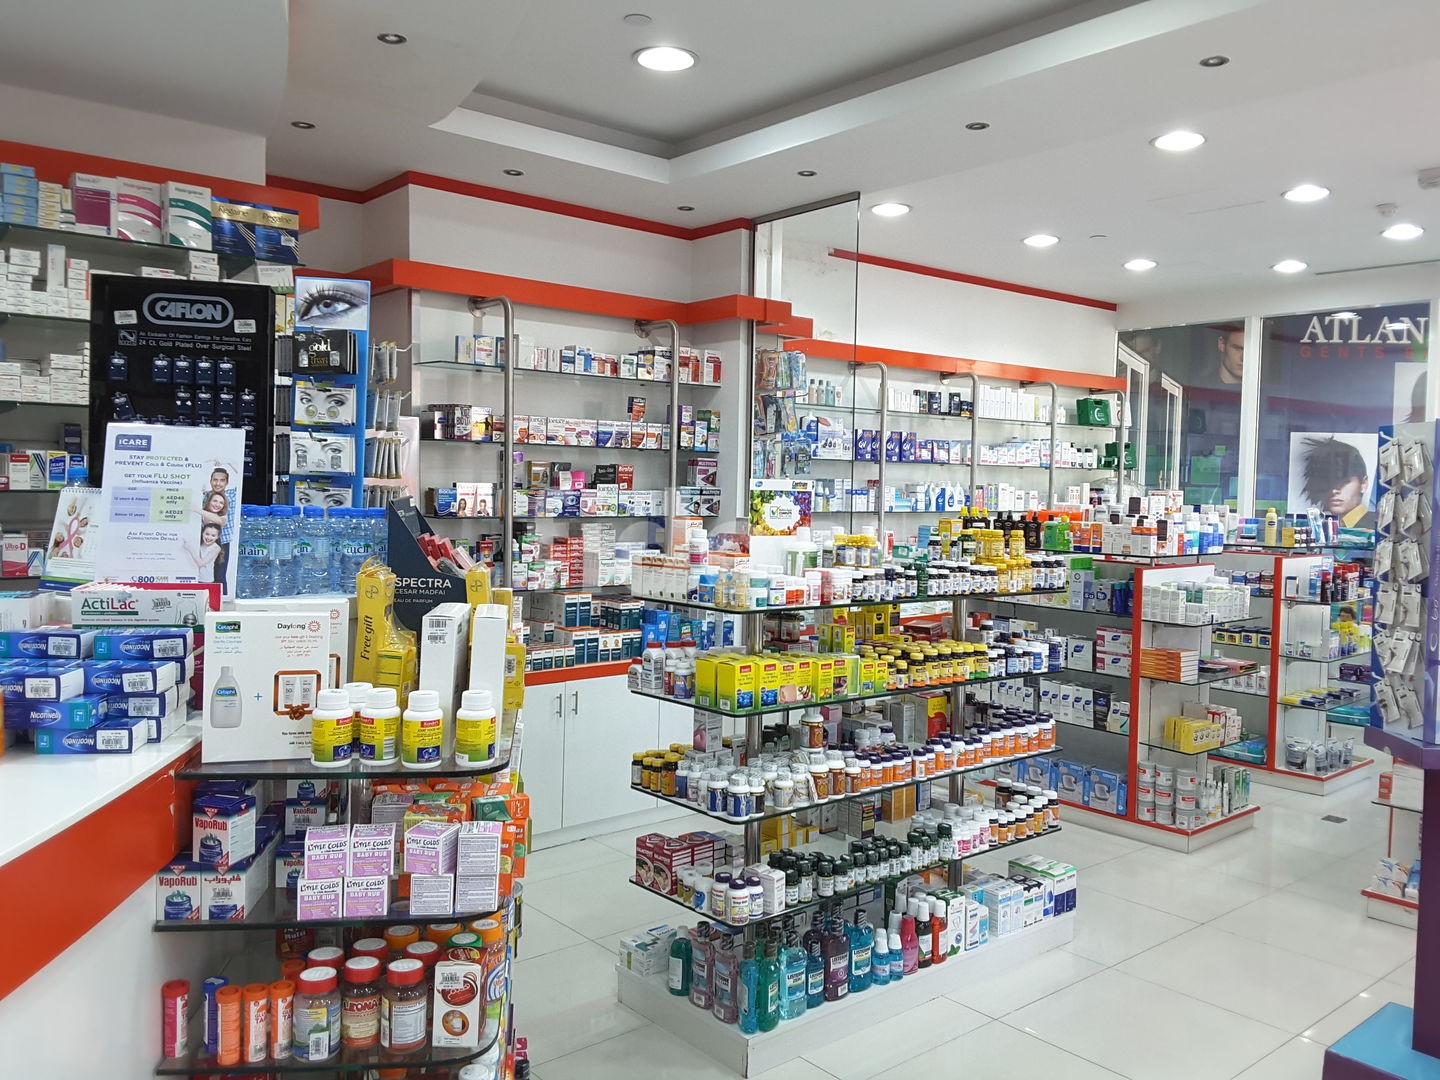 Care & Cure Pharmacy, Dubai